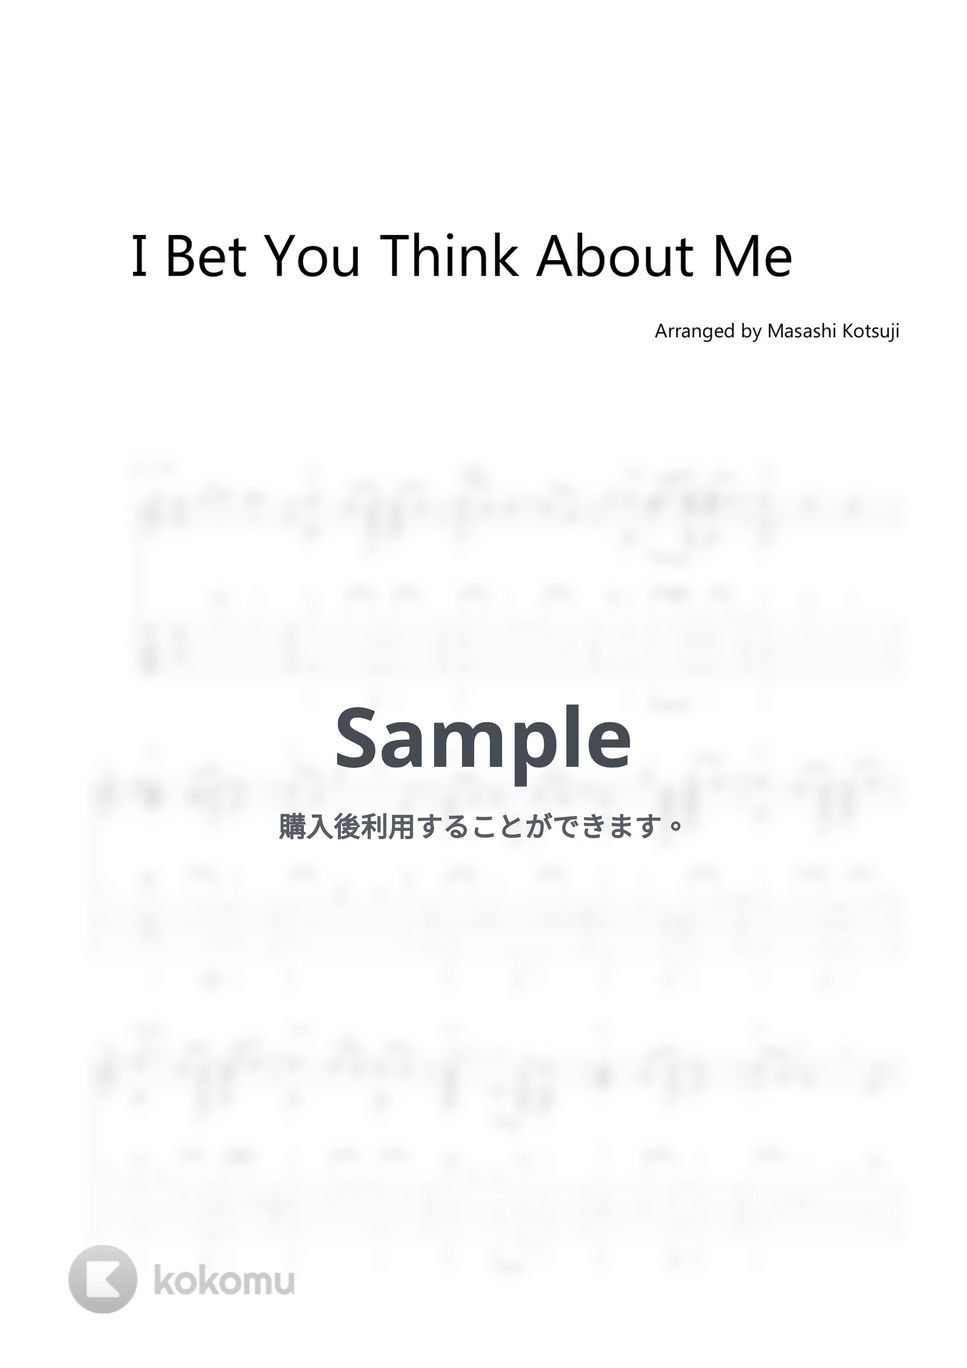 Taylor Swift - I Bet You Think About Me (Short ver.) by Masashi Kotsuji